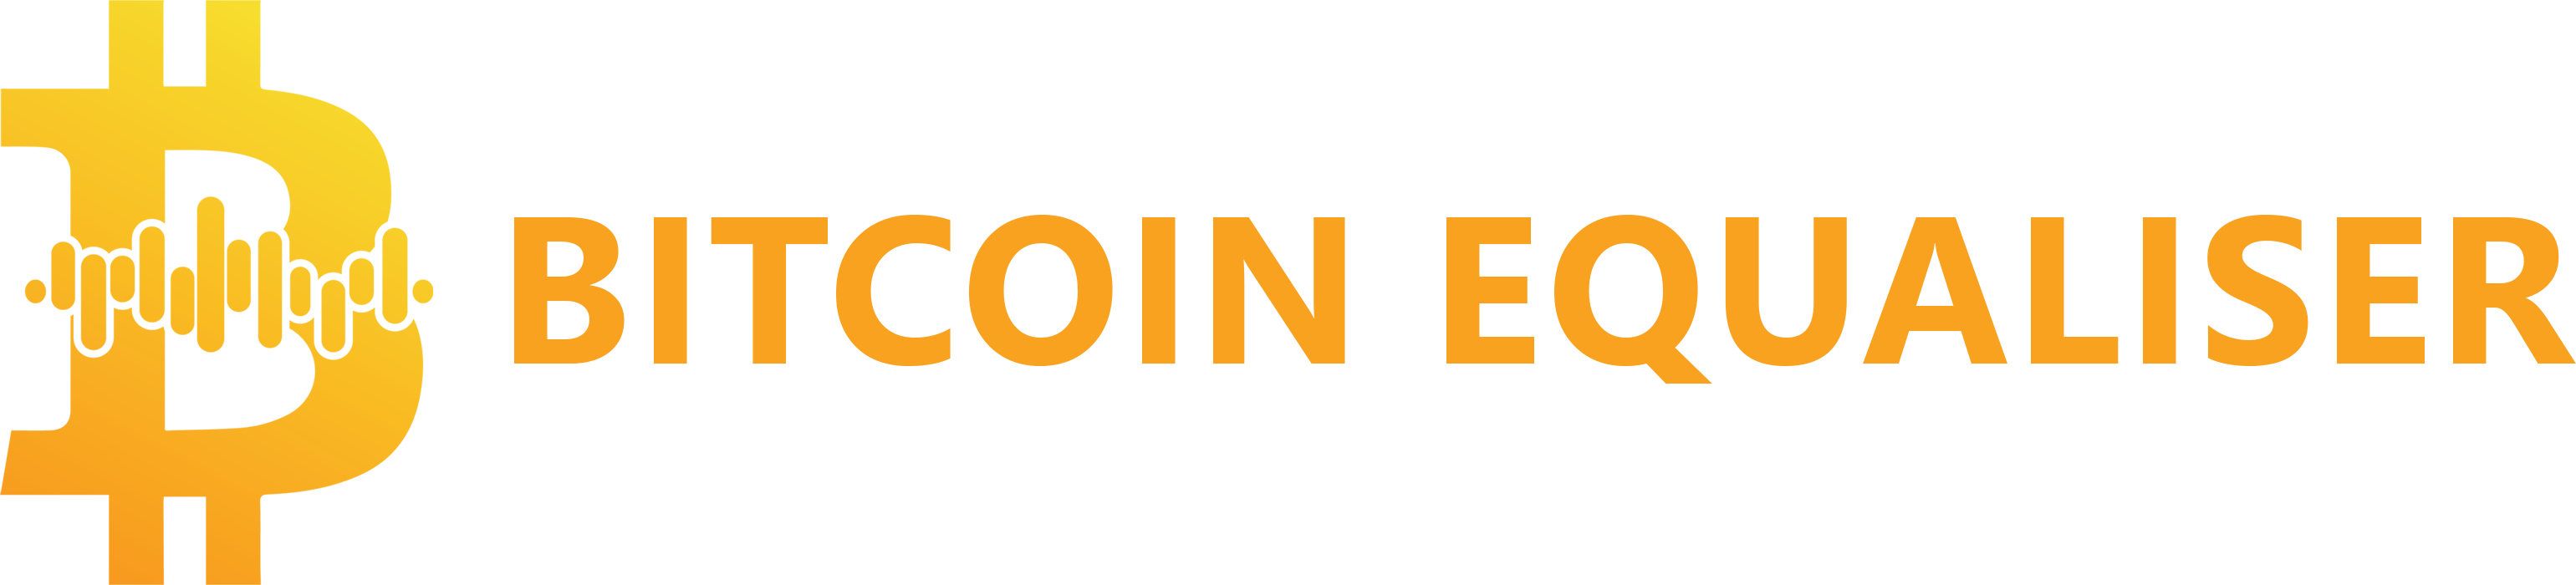 bitcoin equaliser логотип